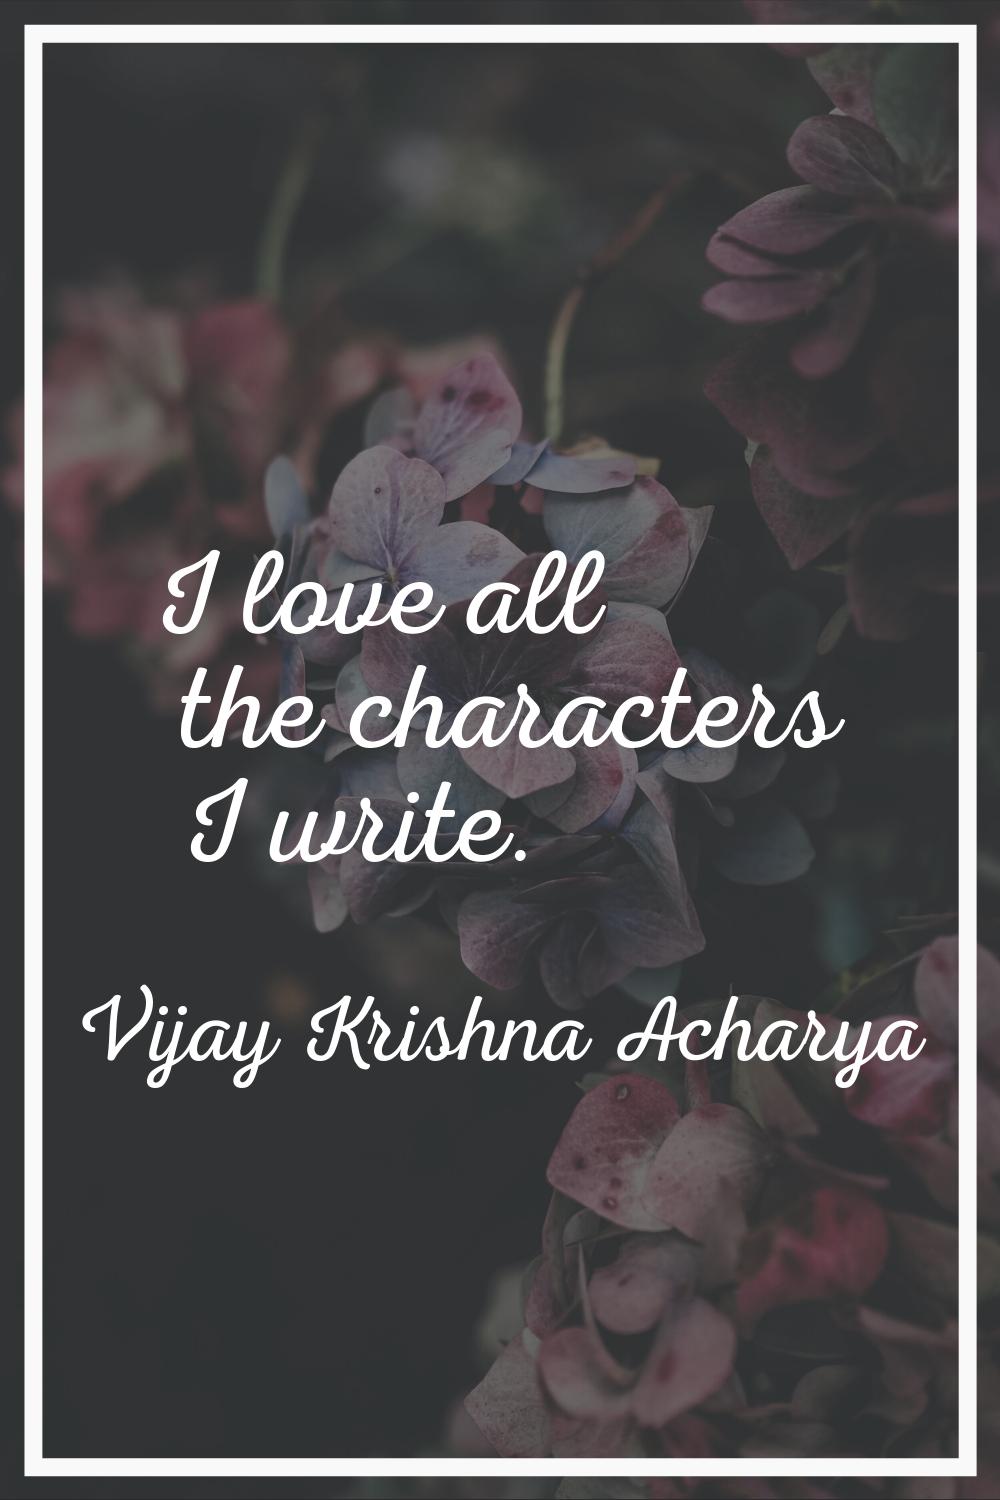 I love all the characters I write.